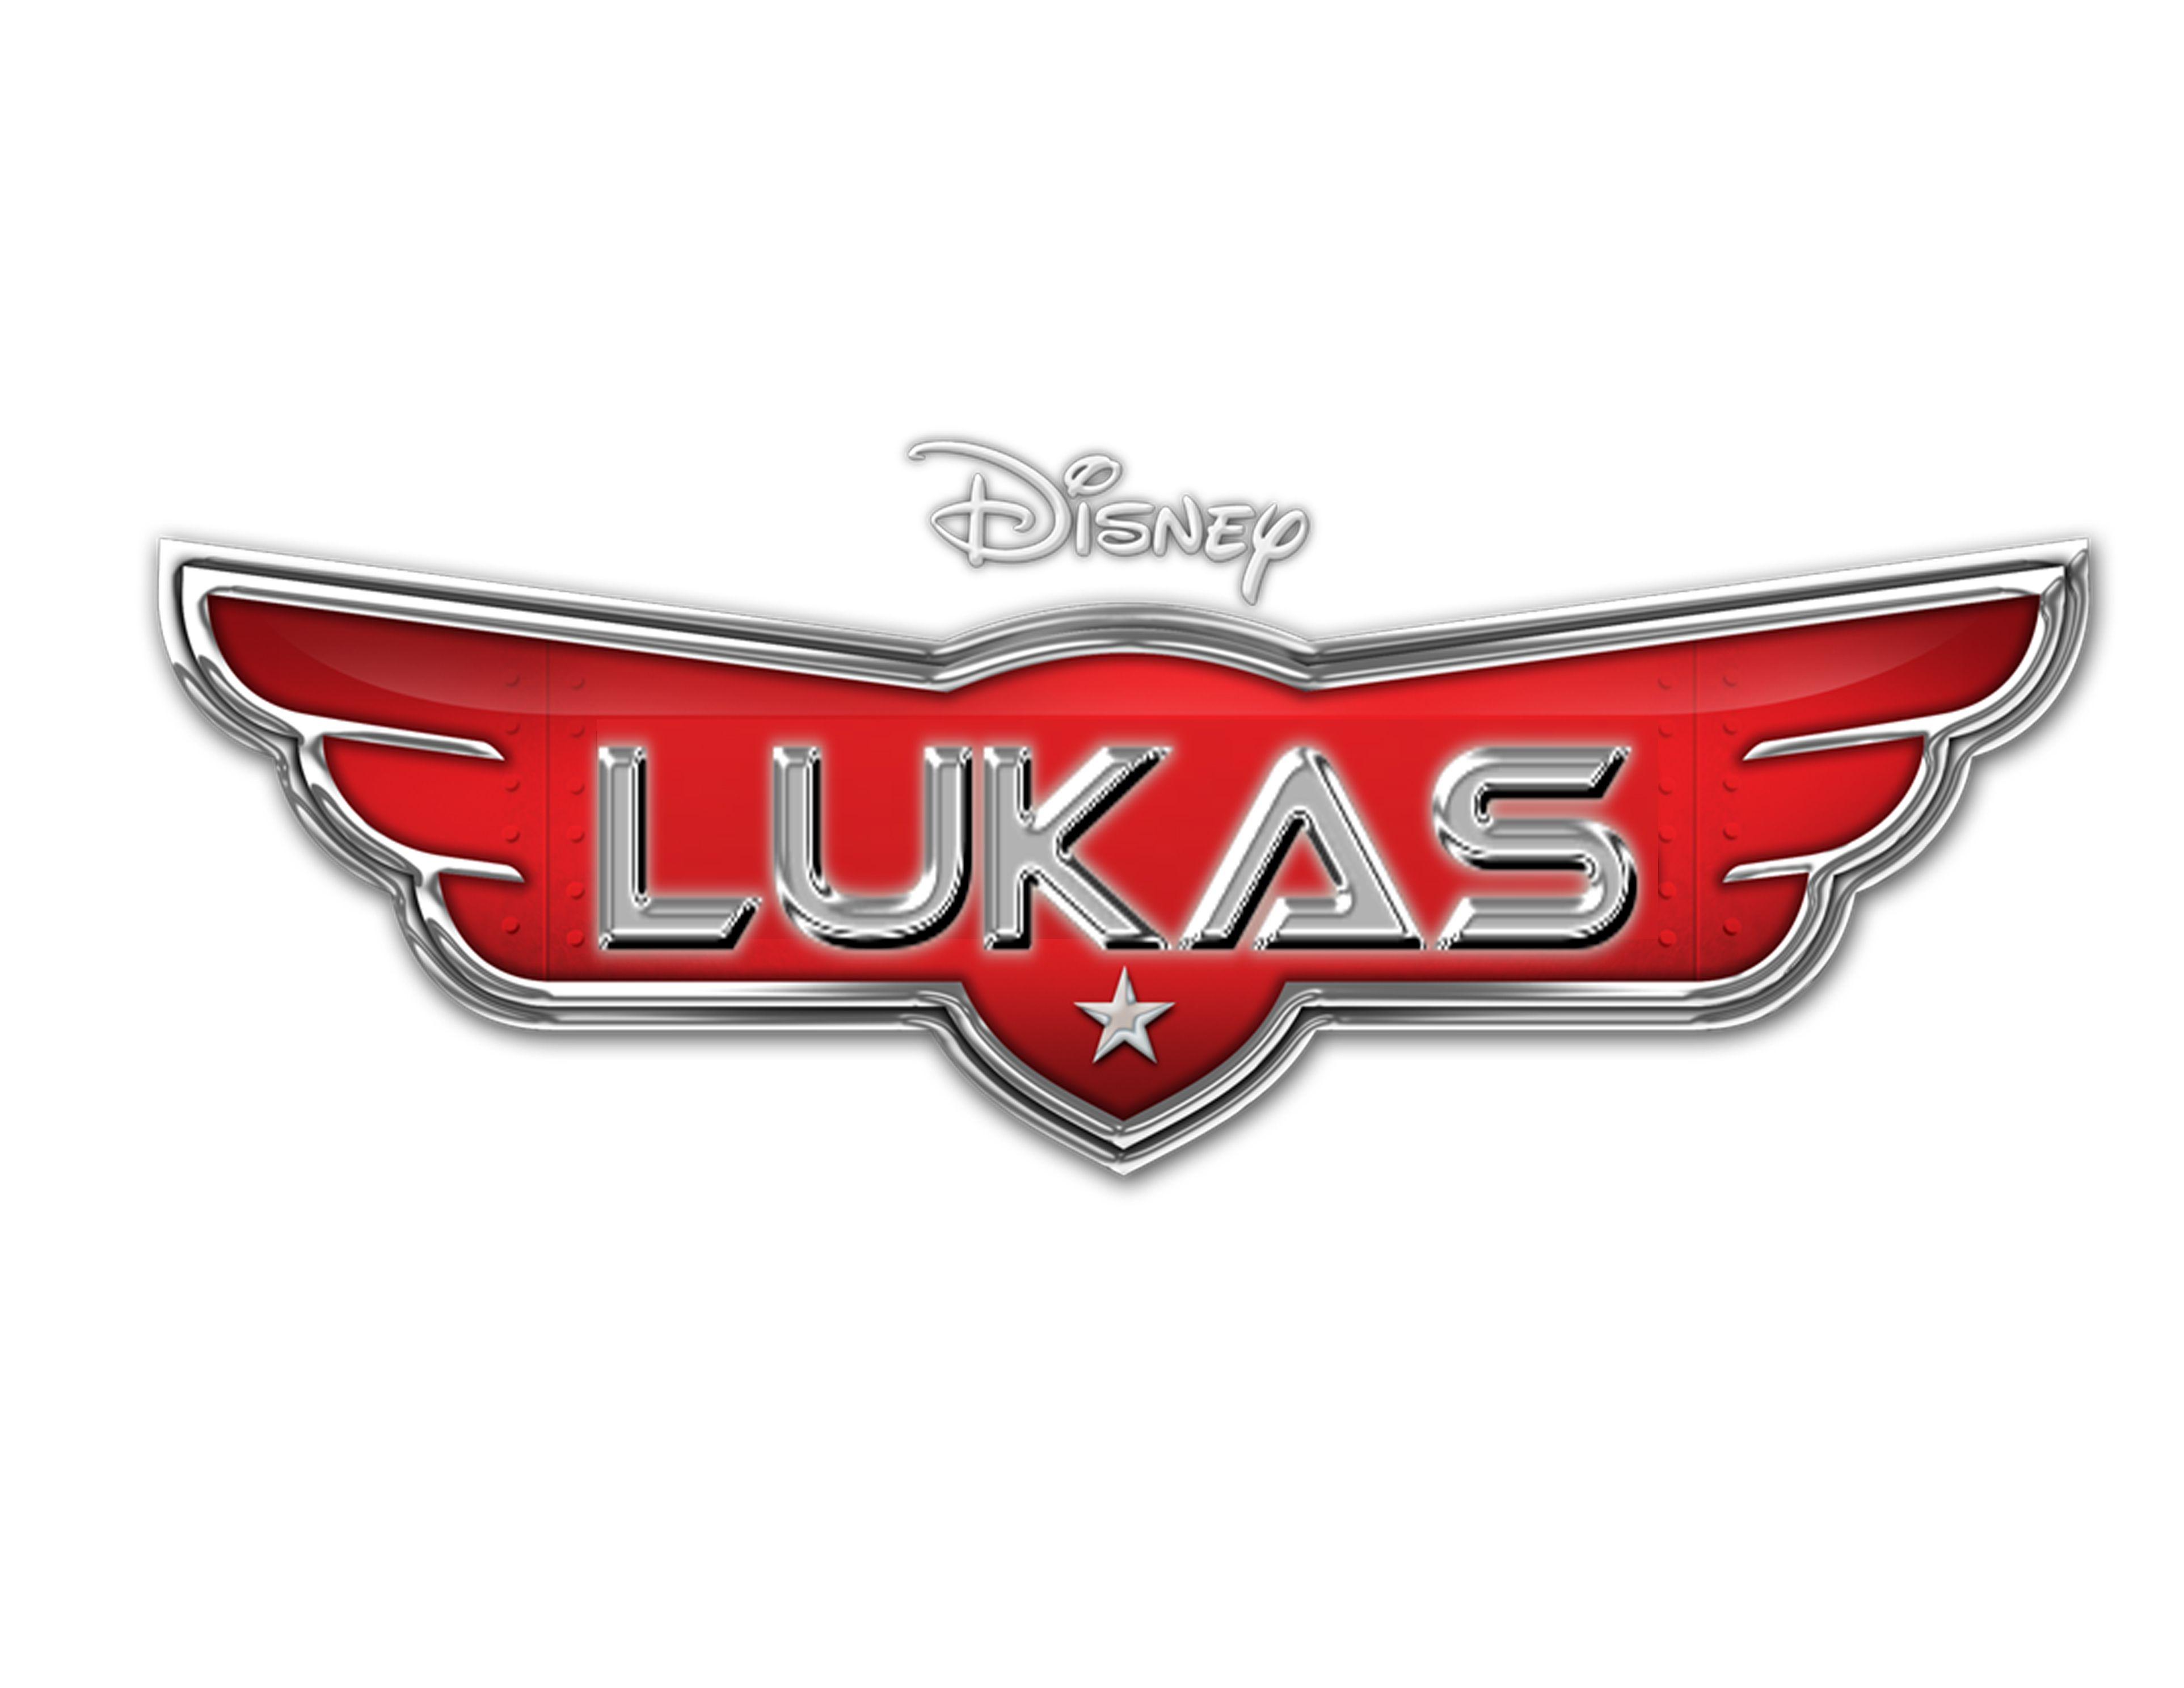 Disney Planes Logo - Disney Planes logo for iron on tshirts, wall decor or party décor ...